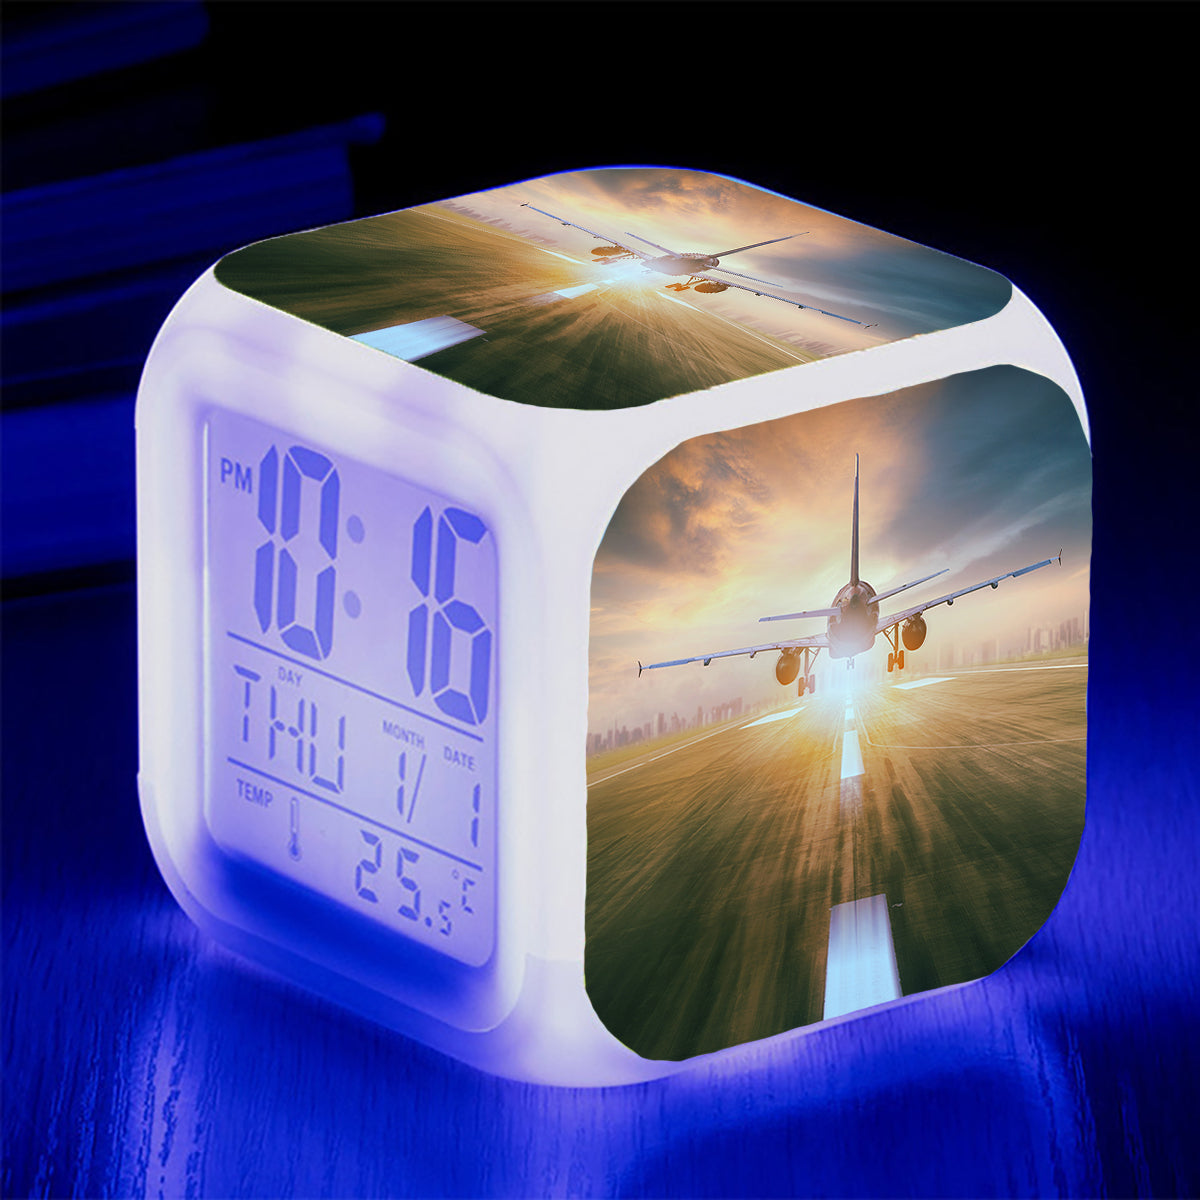 Airplane Flying Over Runway Designed "7 Colour" Digital Alarm Clock